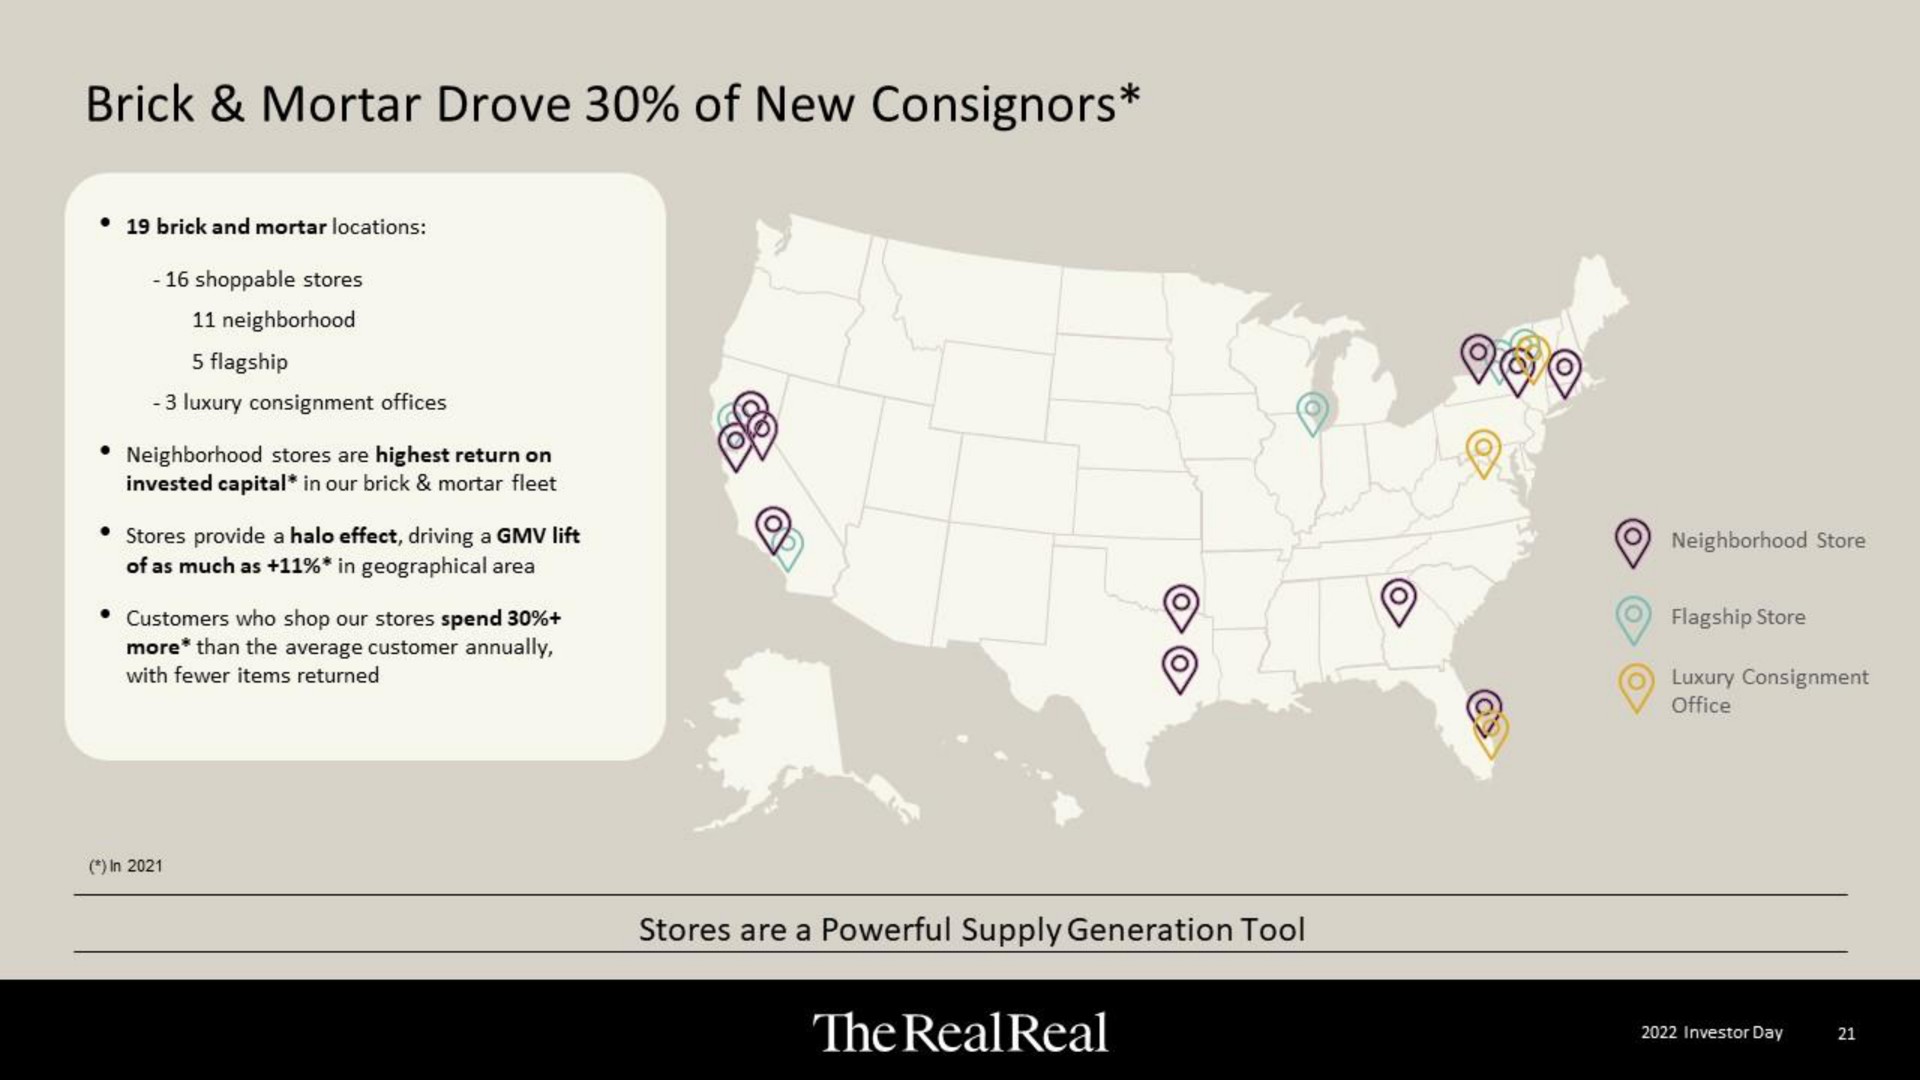 brick mortar drove of new consignors | The RealReal